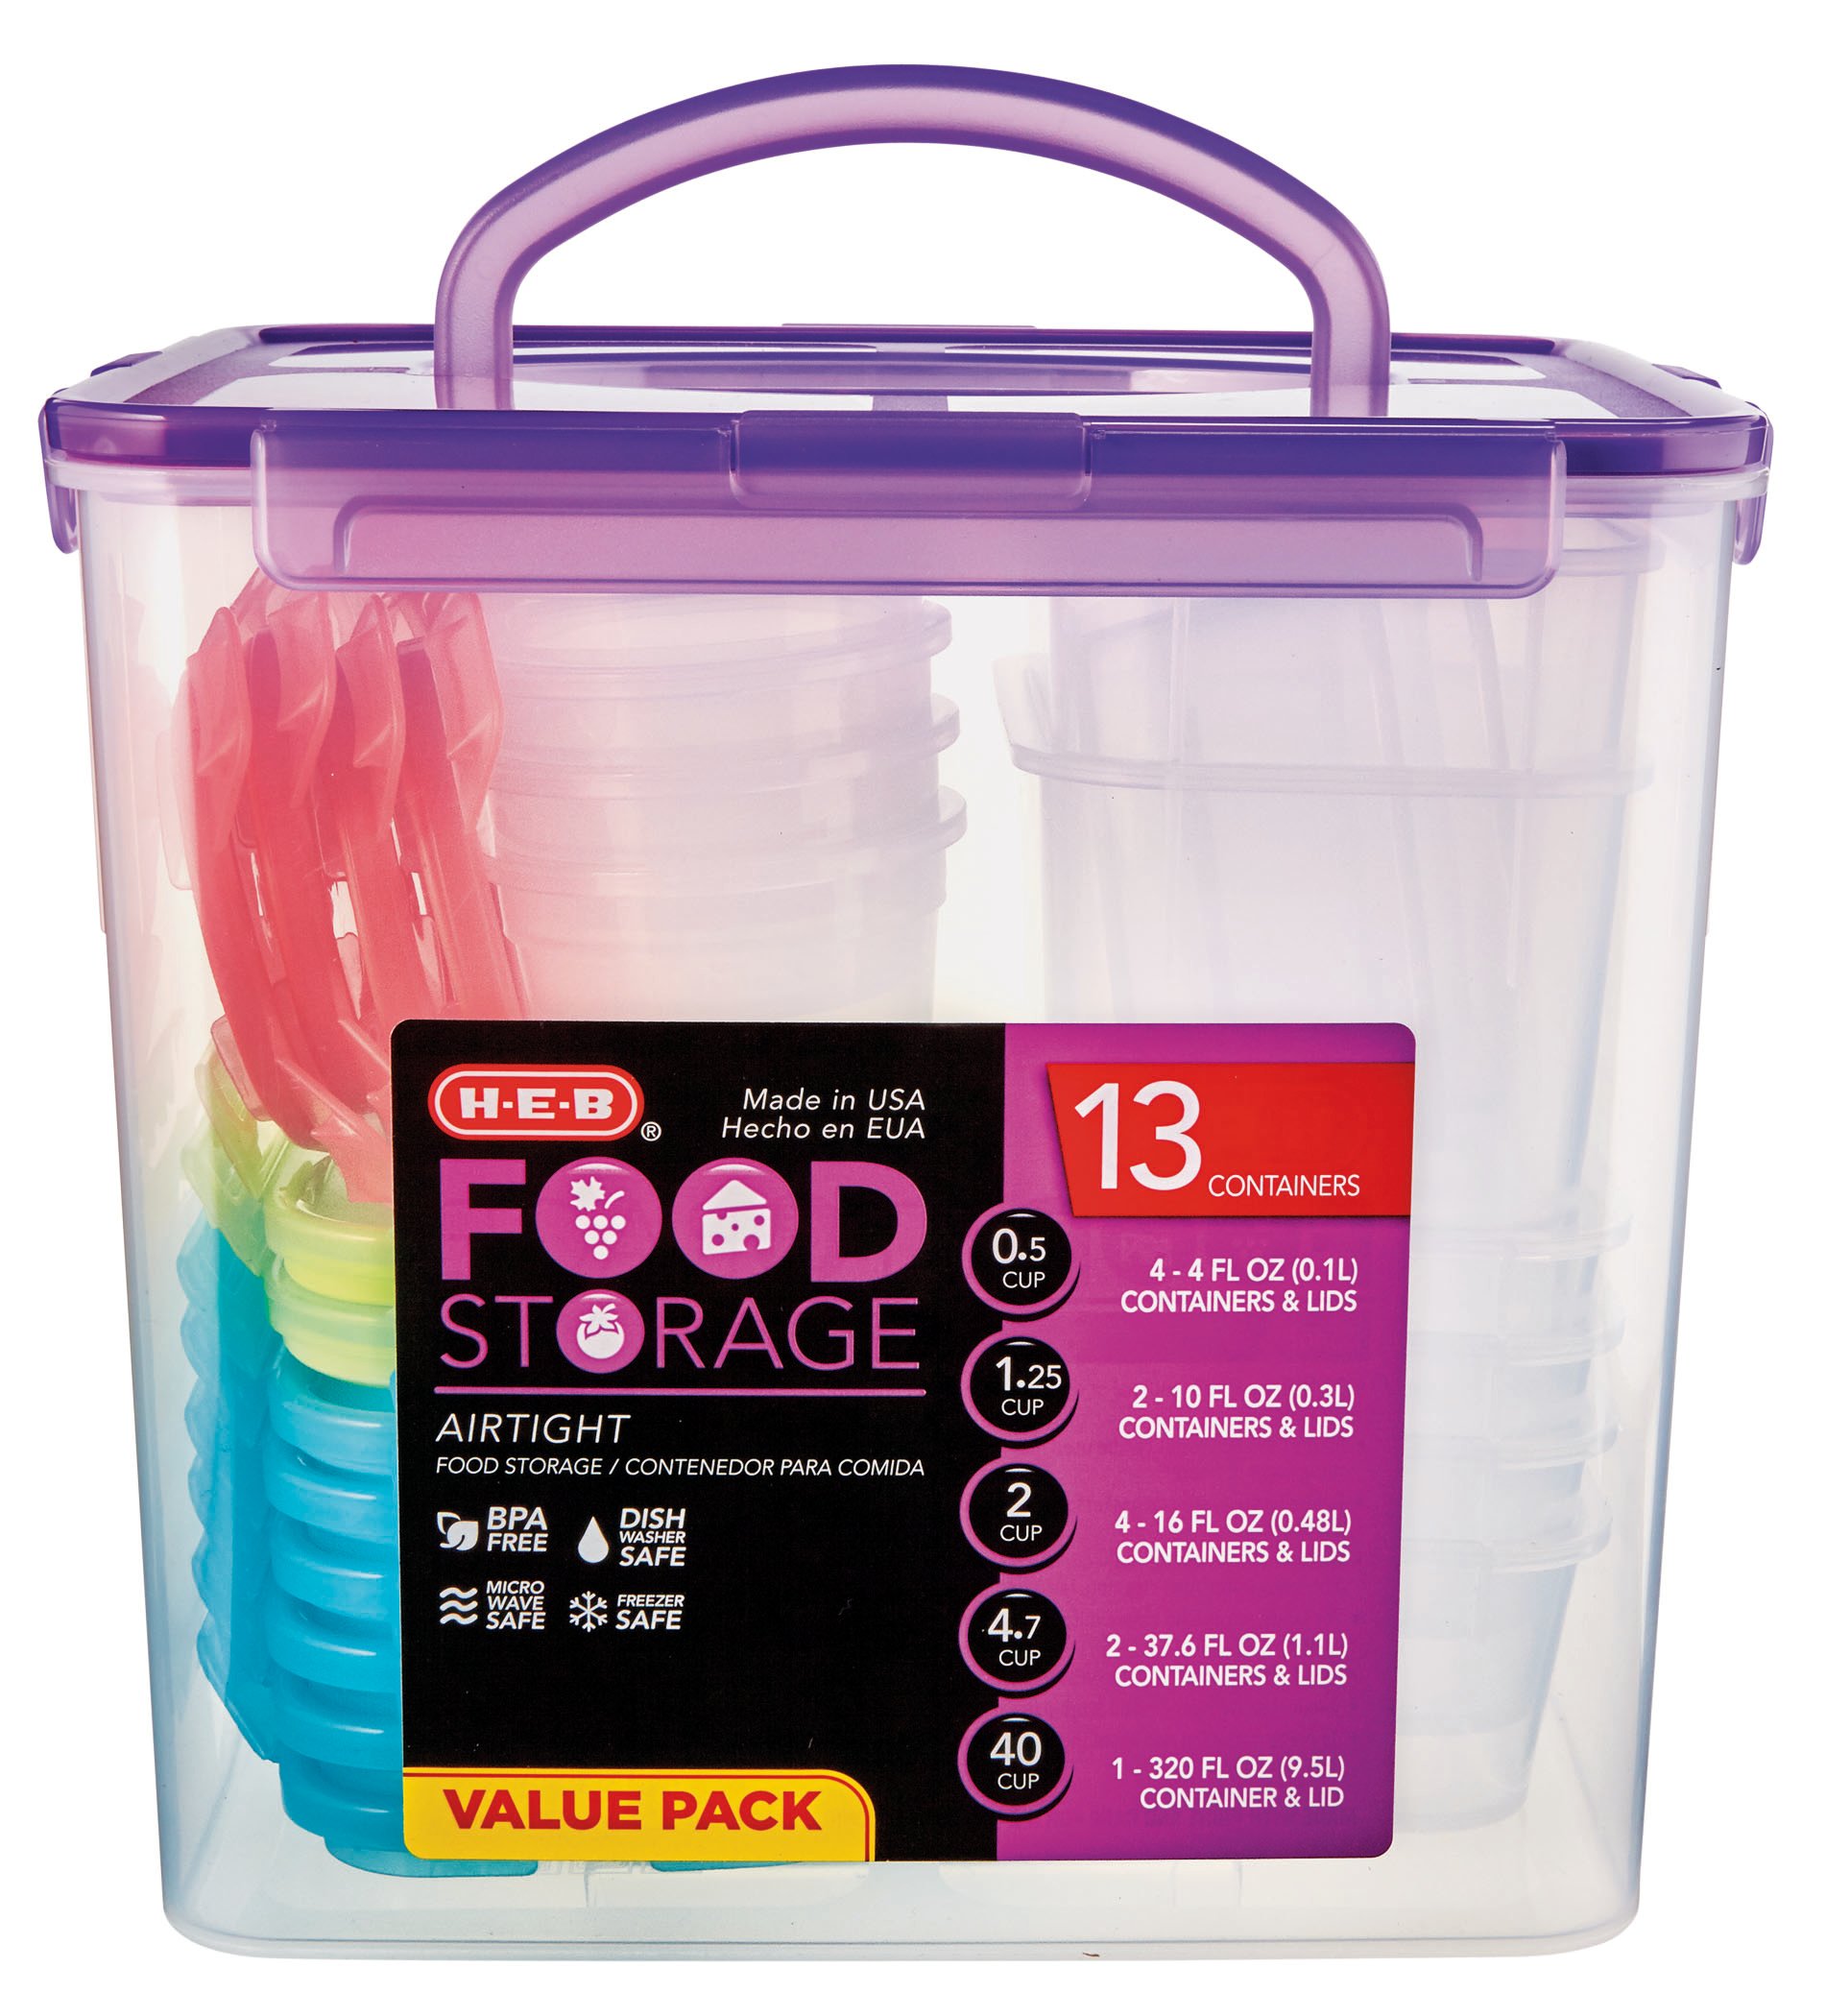 Easy Pack 2.3 LTR Cereal Pitcher - Shop Food Storage at H-E-B